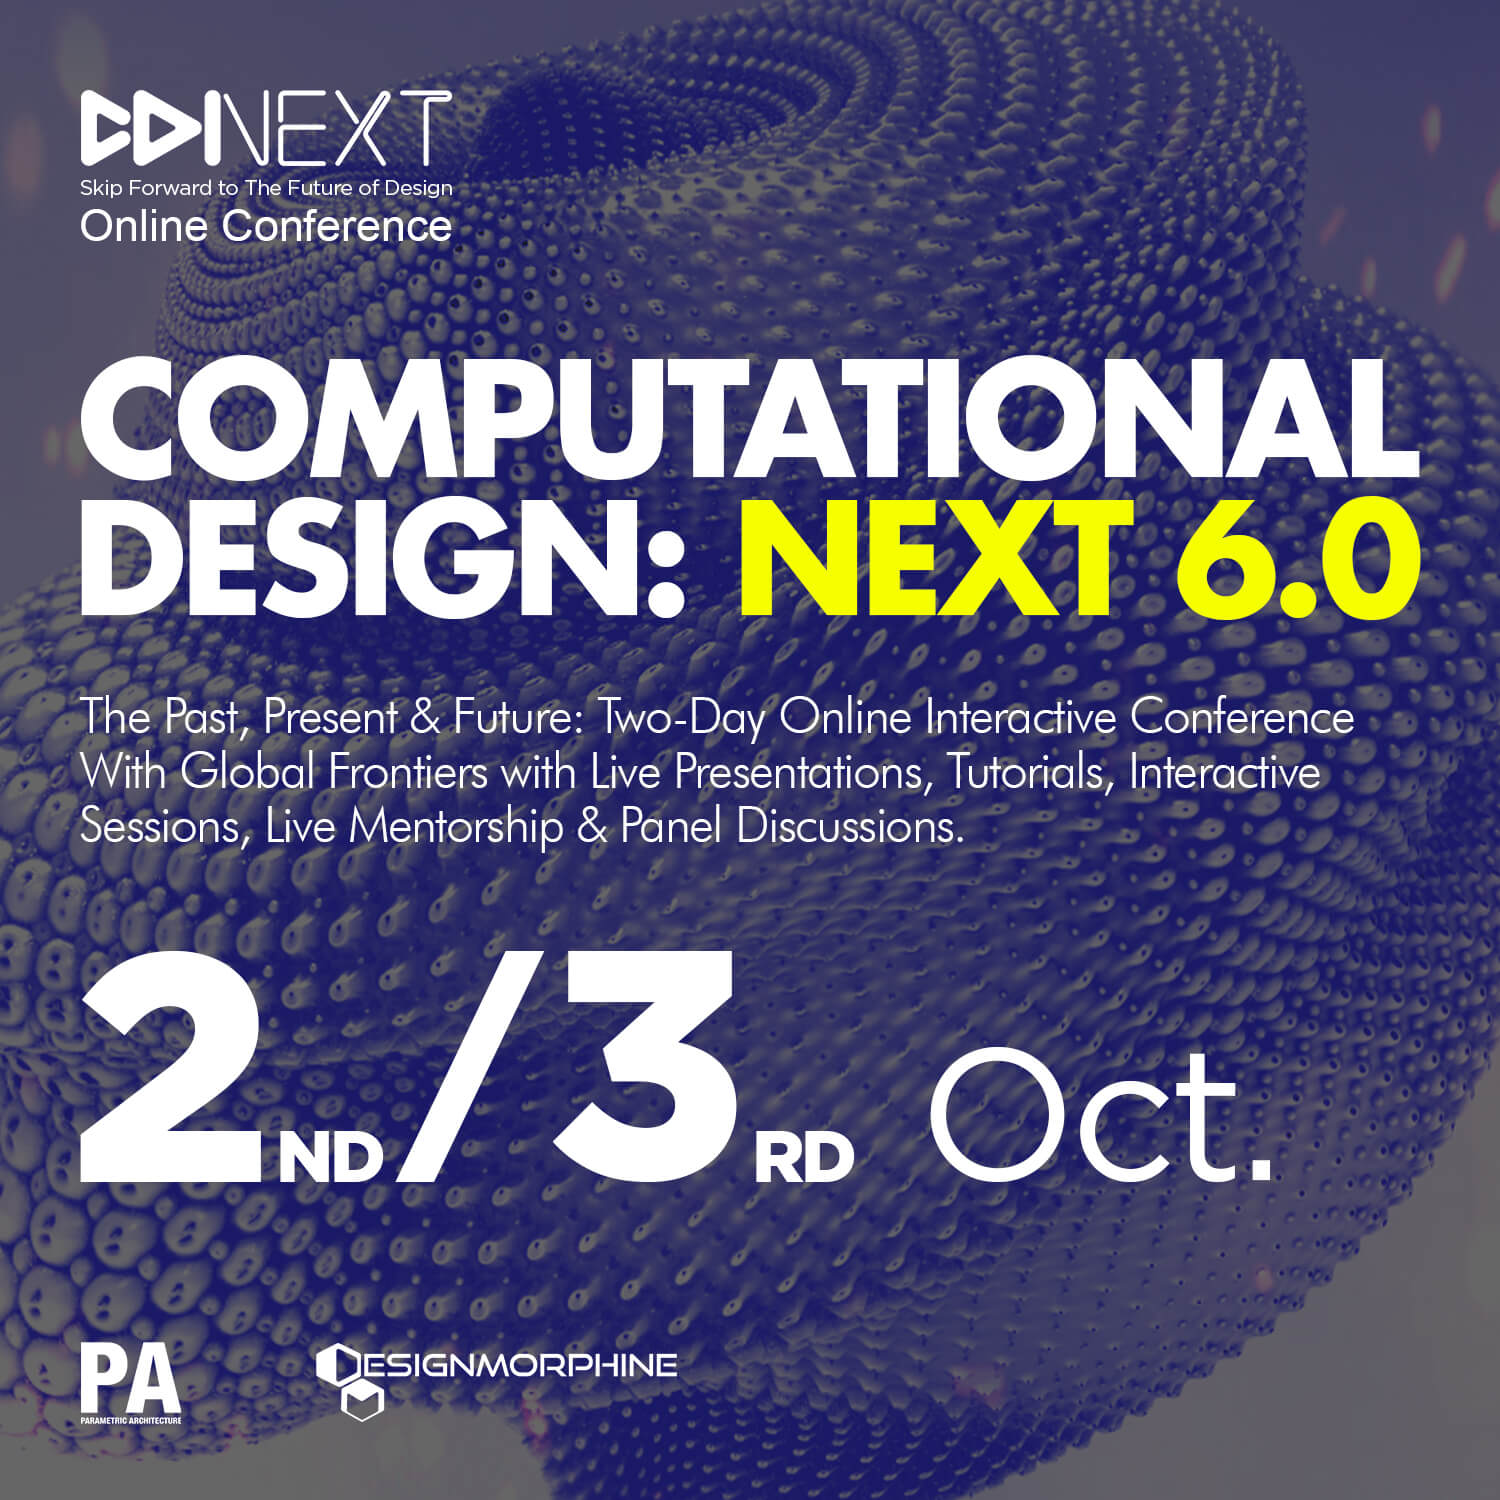 A poster for Computational design: NEXT 6.0